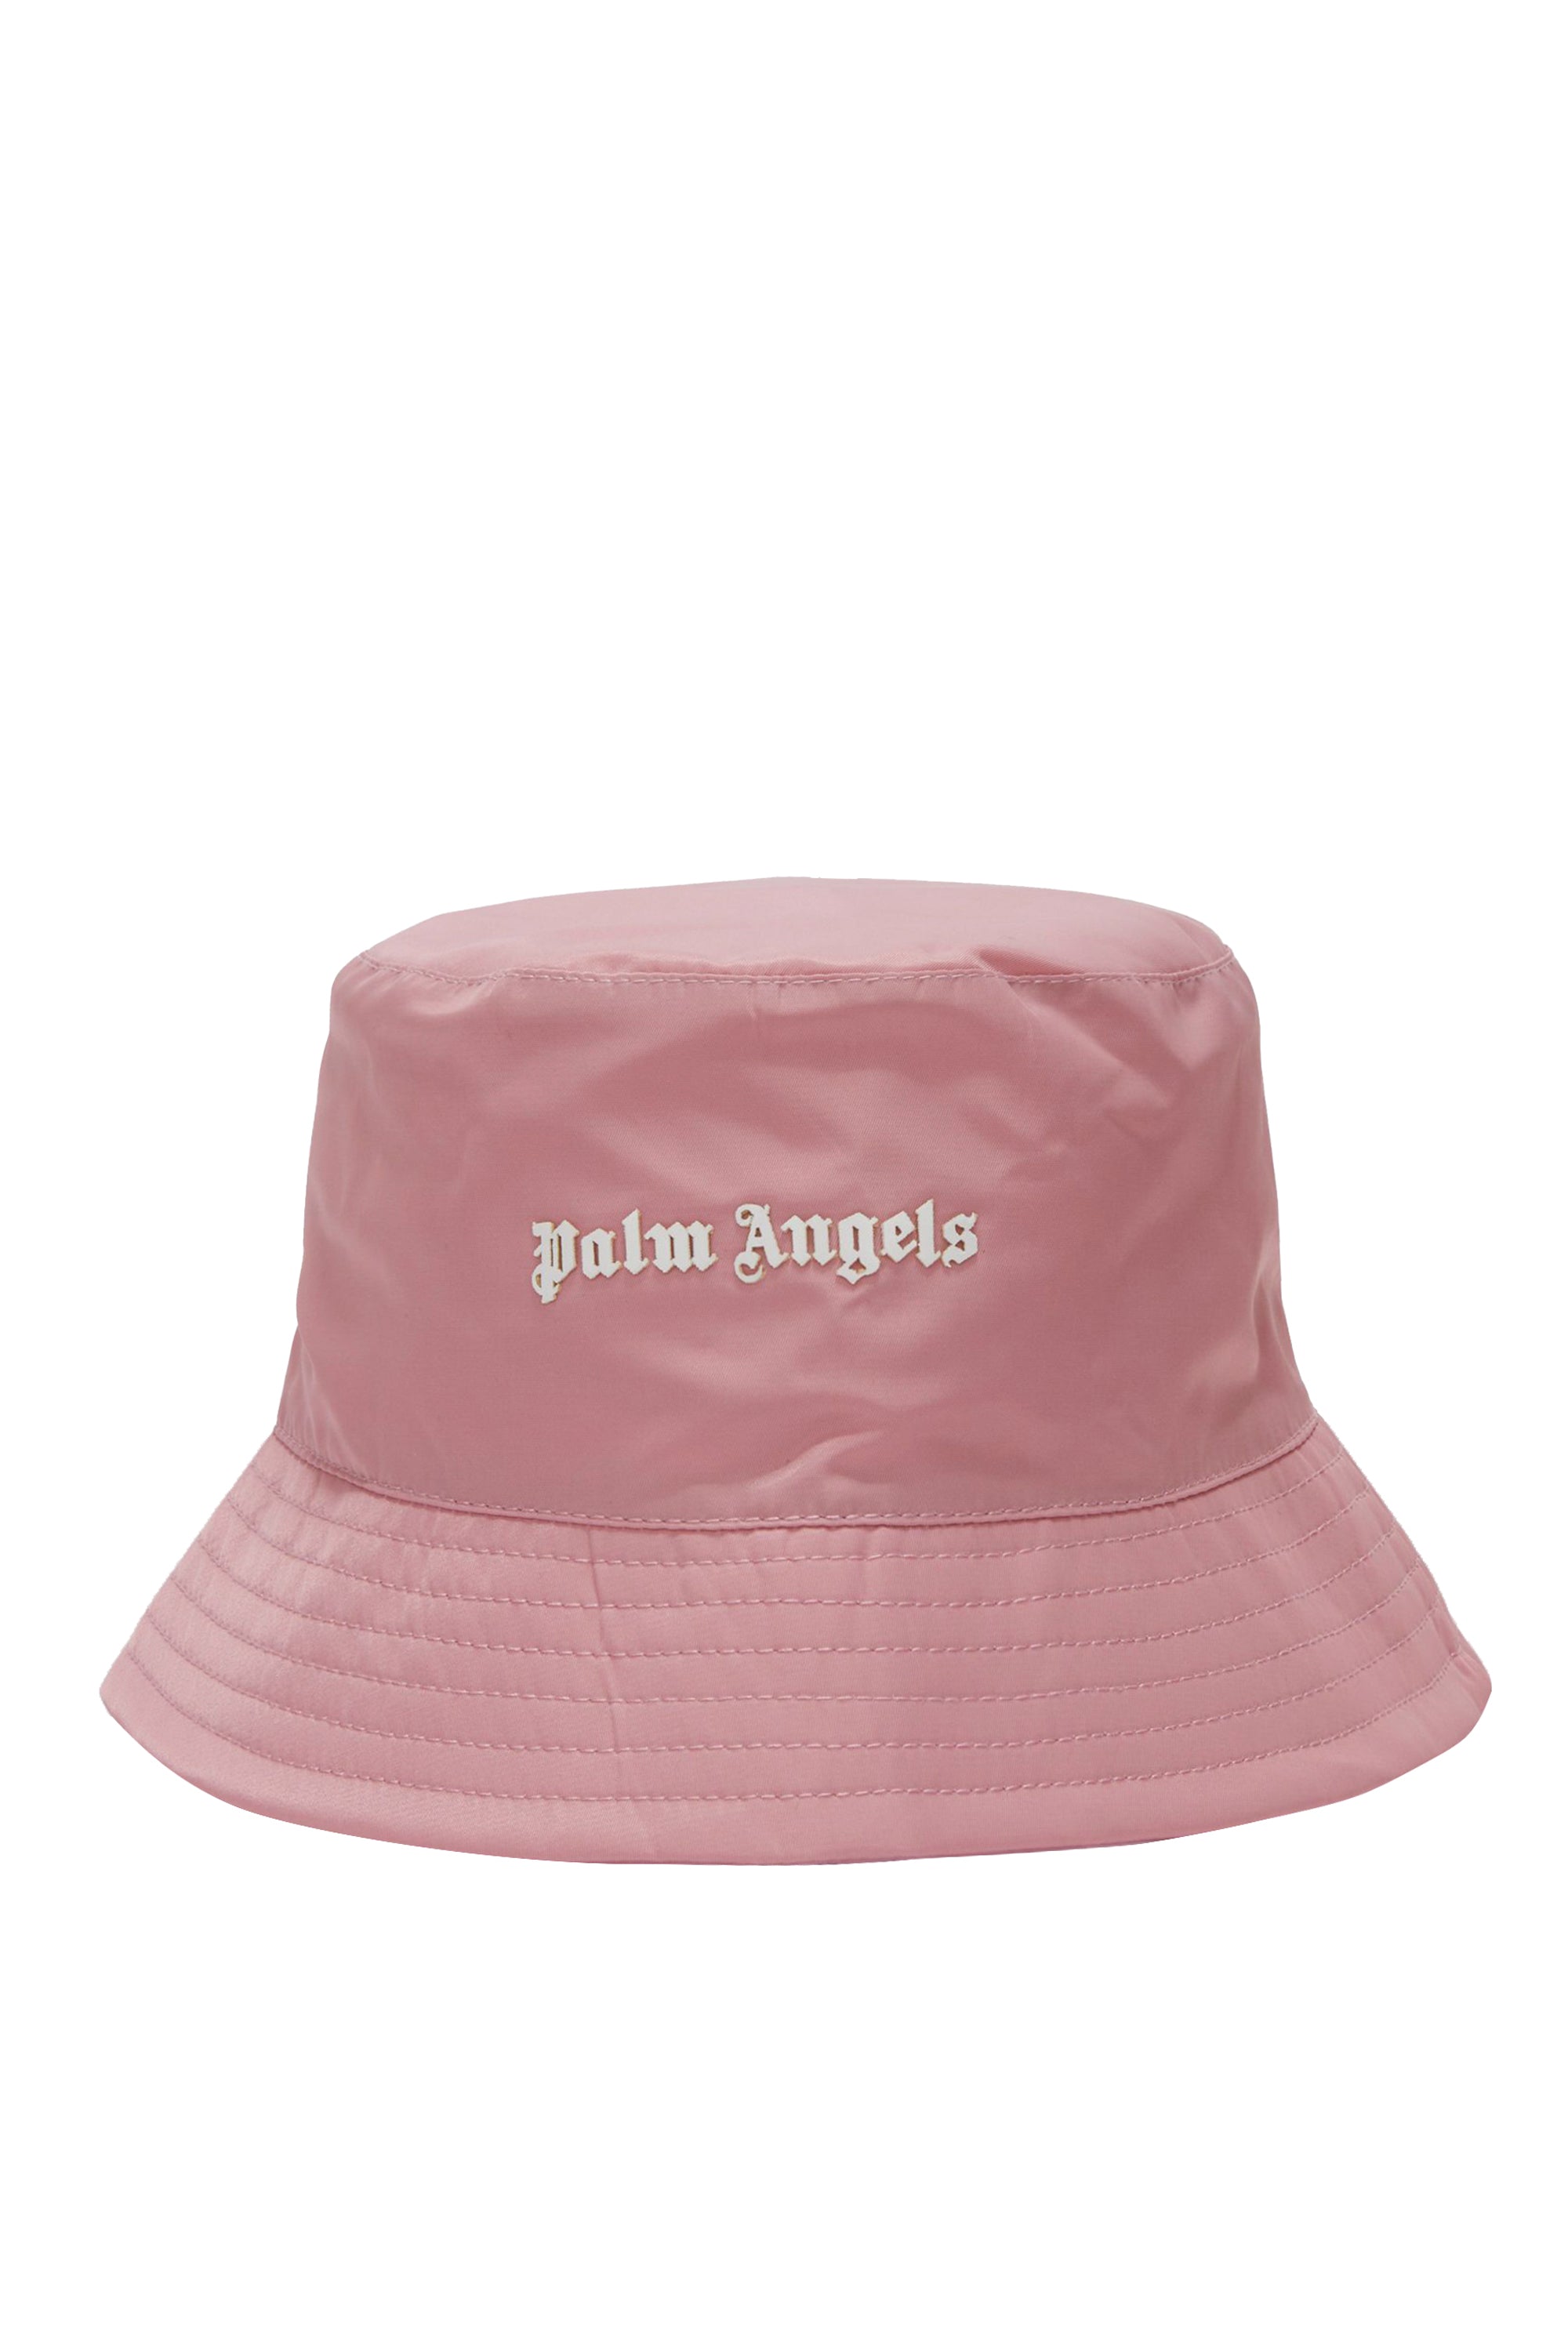 Palm Angels パームエンジェルス SS23 CLASSIC LOGO BUCKET HAT / PNK